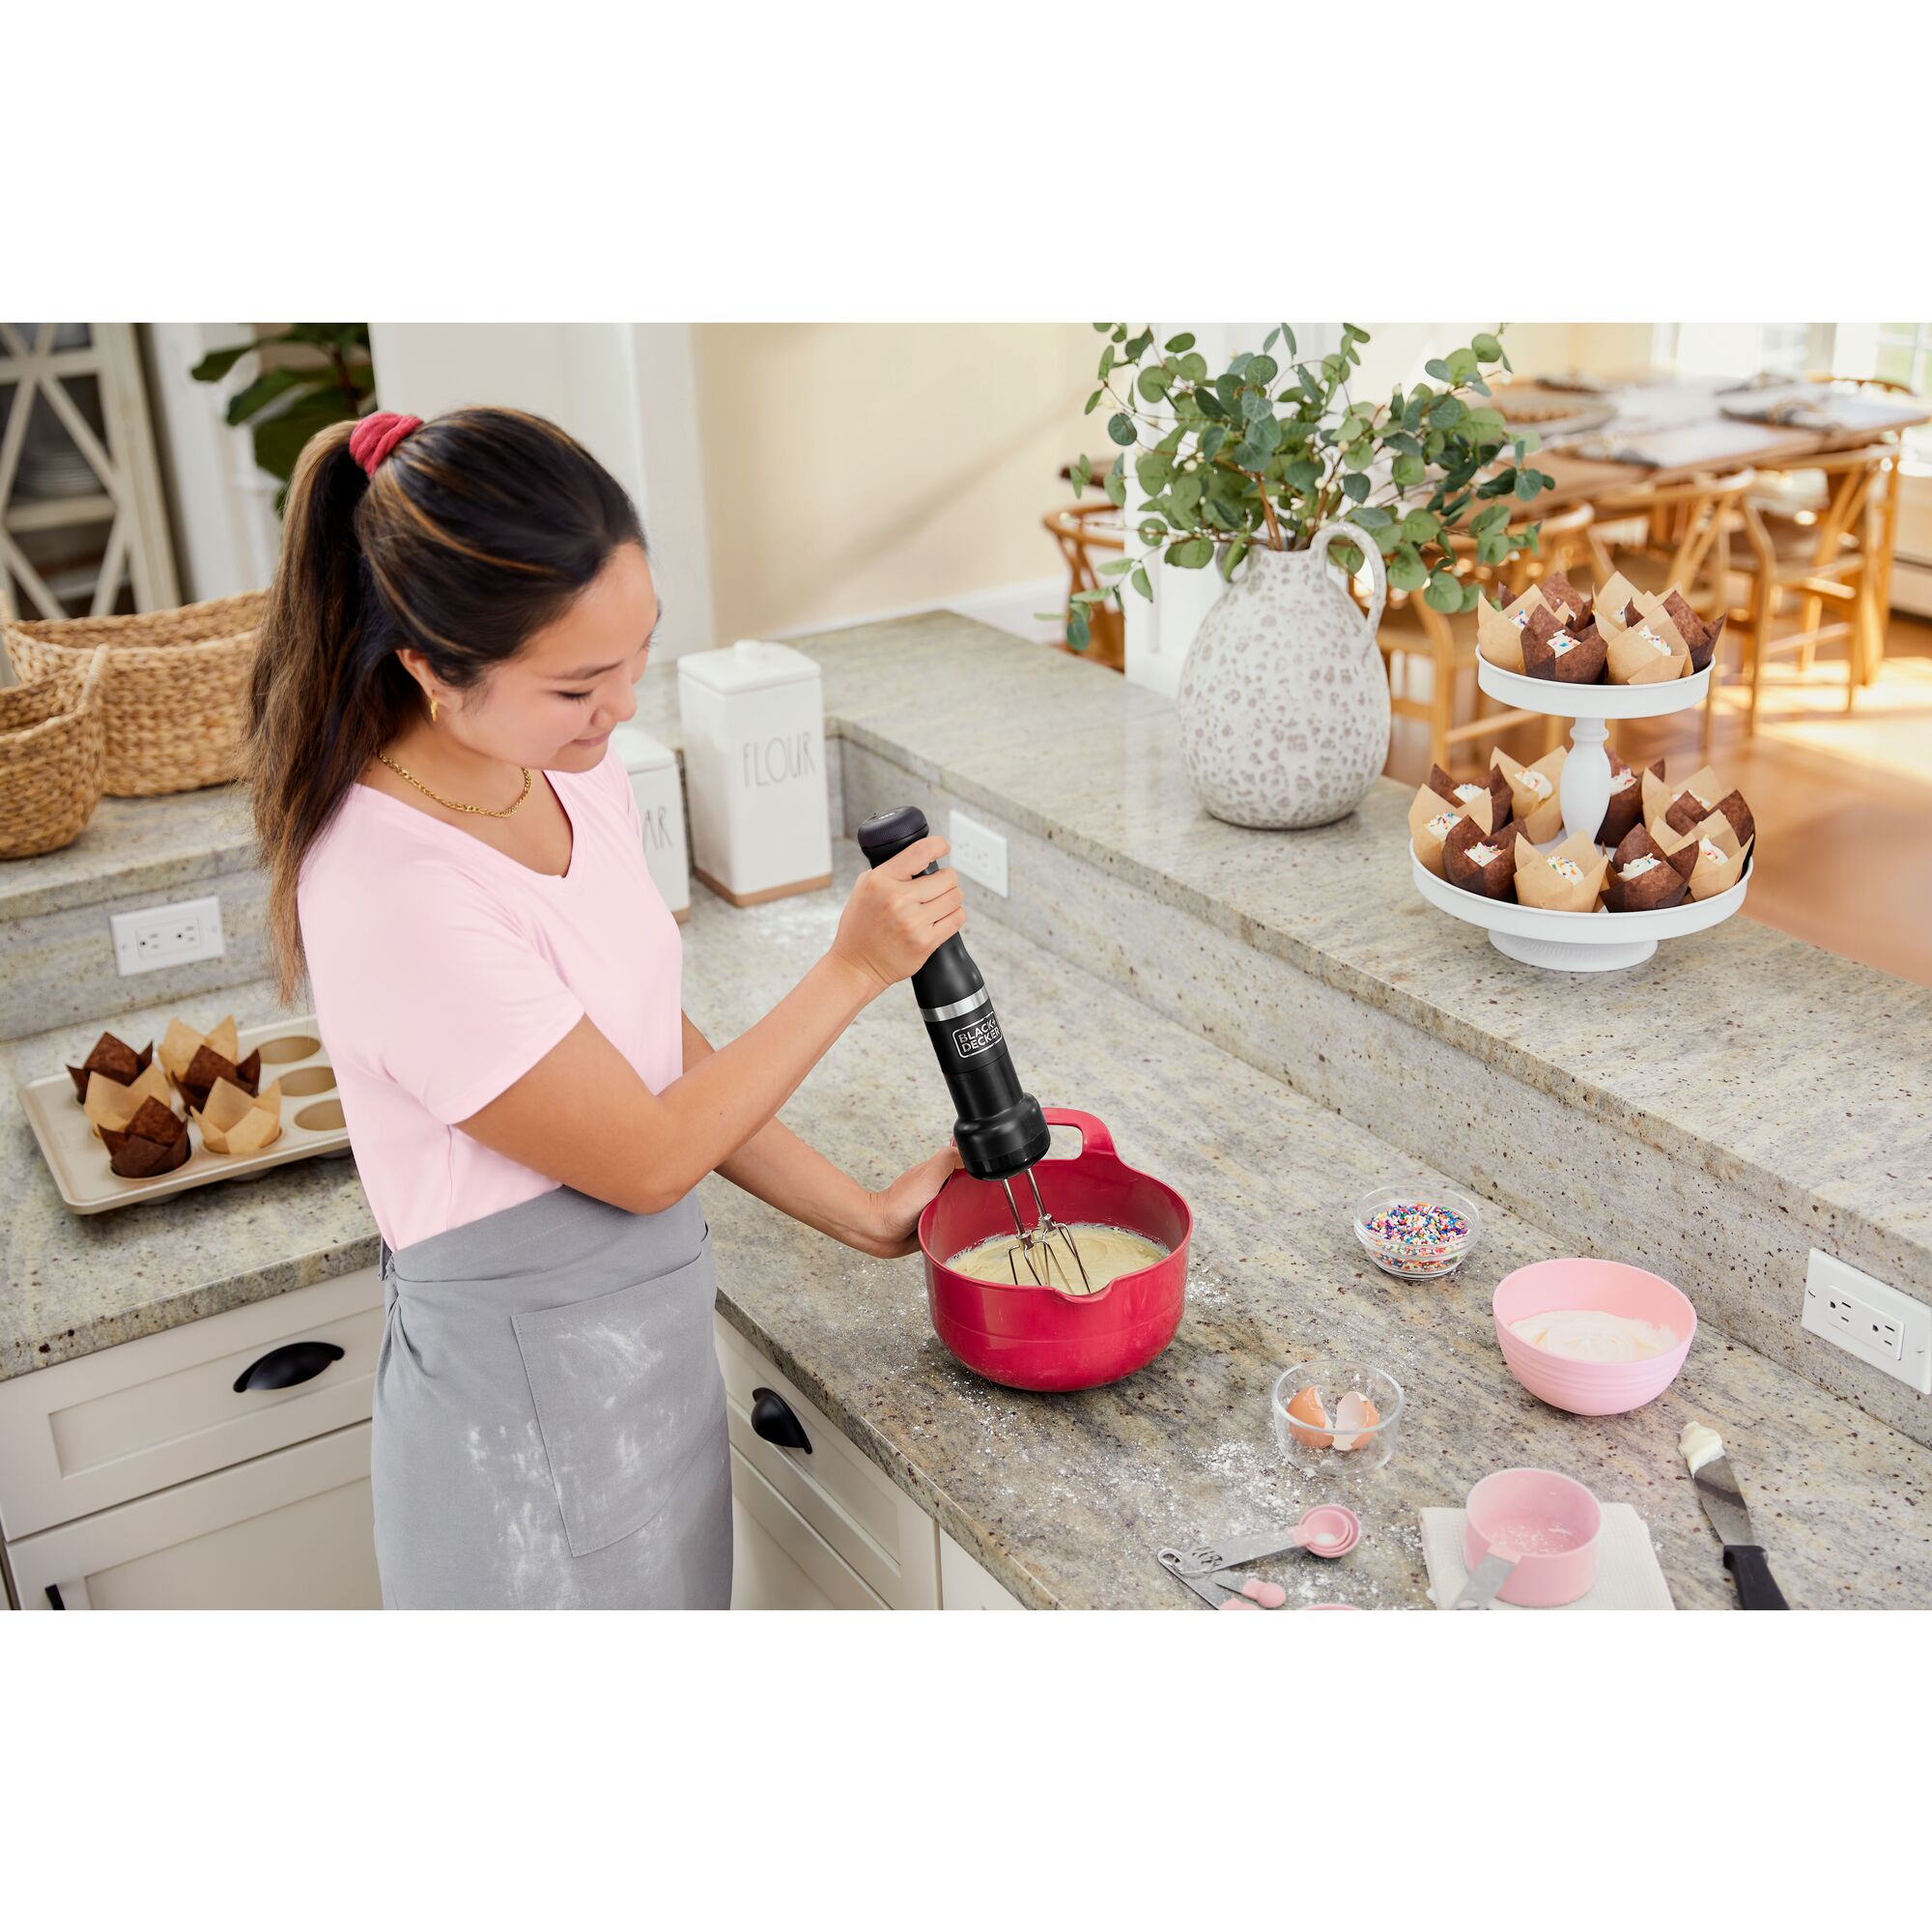 Model using the black, BLACK+DECKER kitchen wand hand mixer attachment to mix cupcake batter